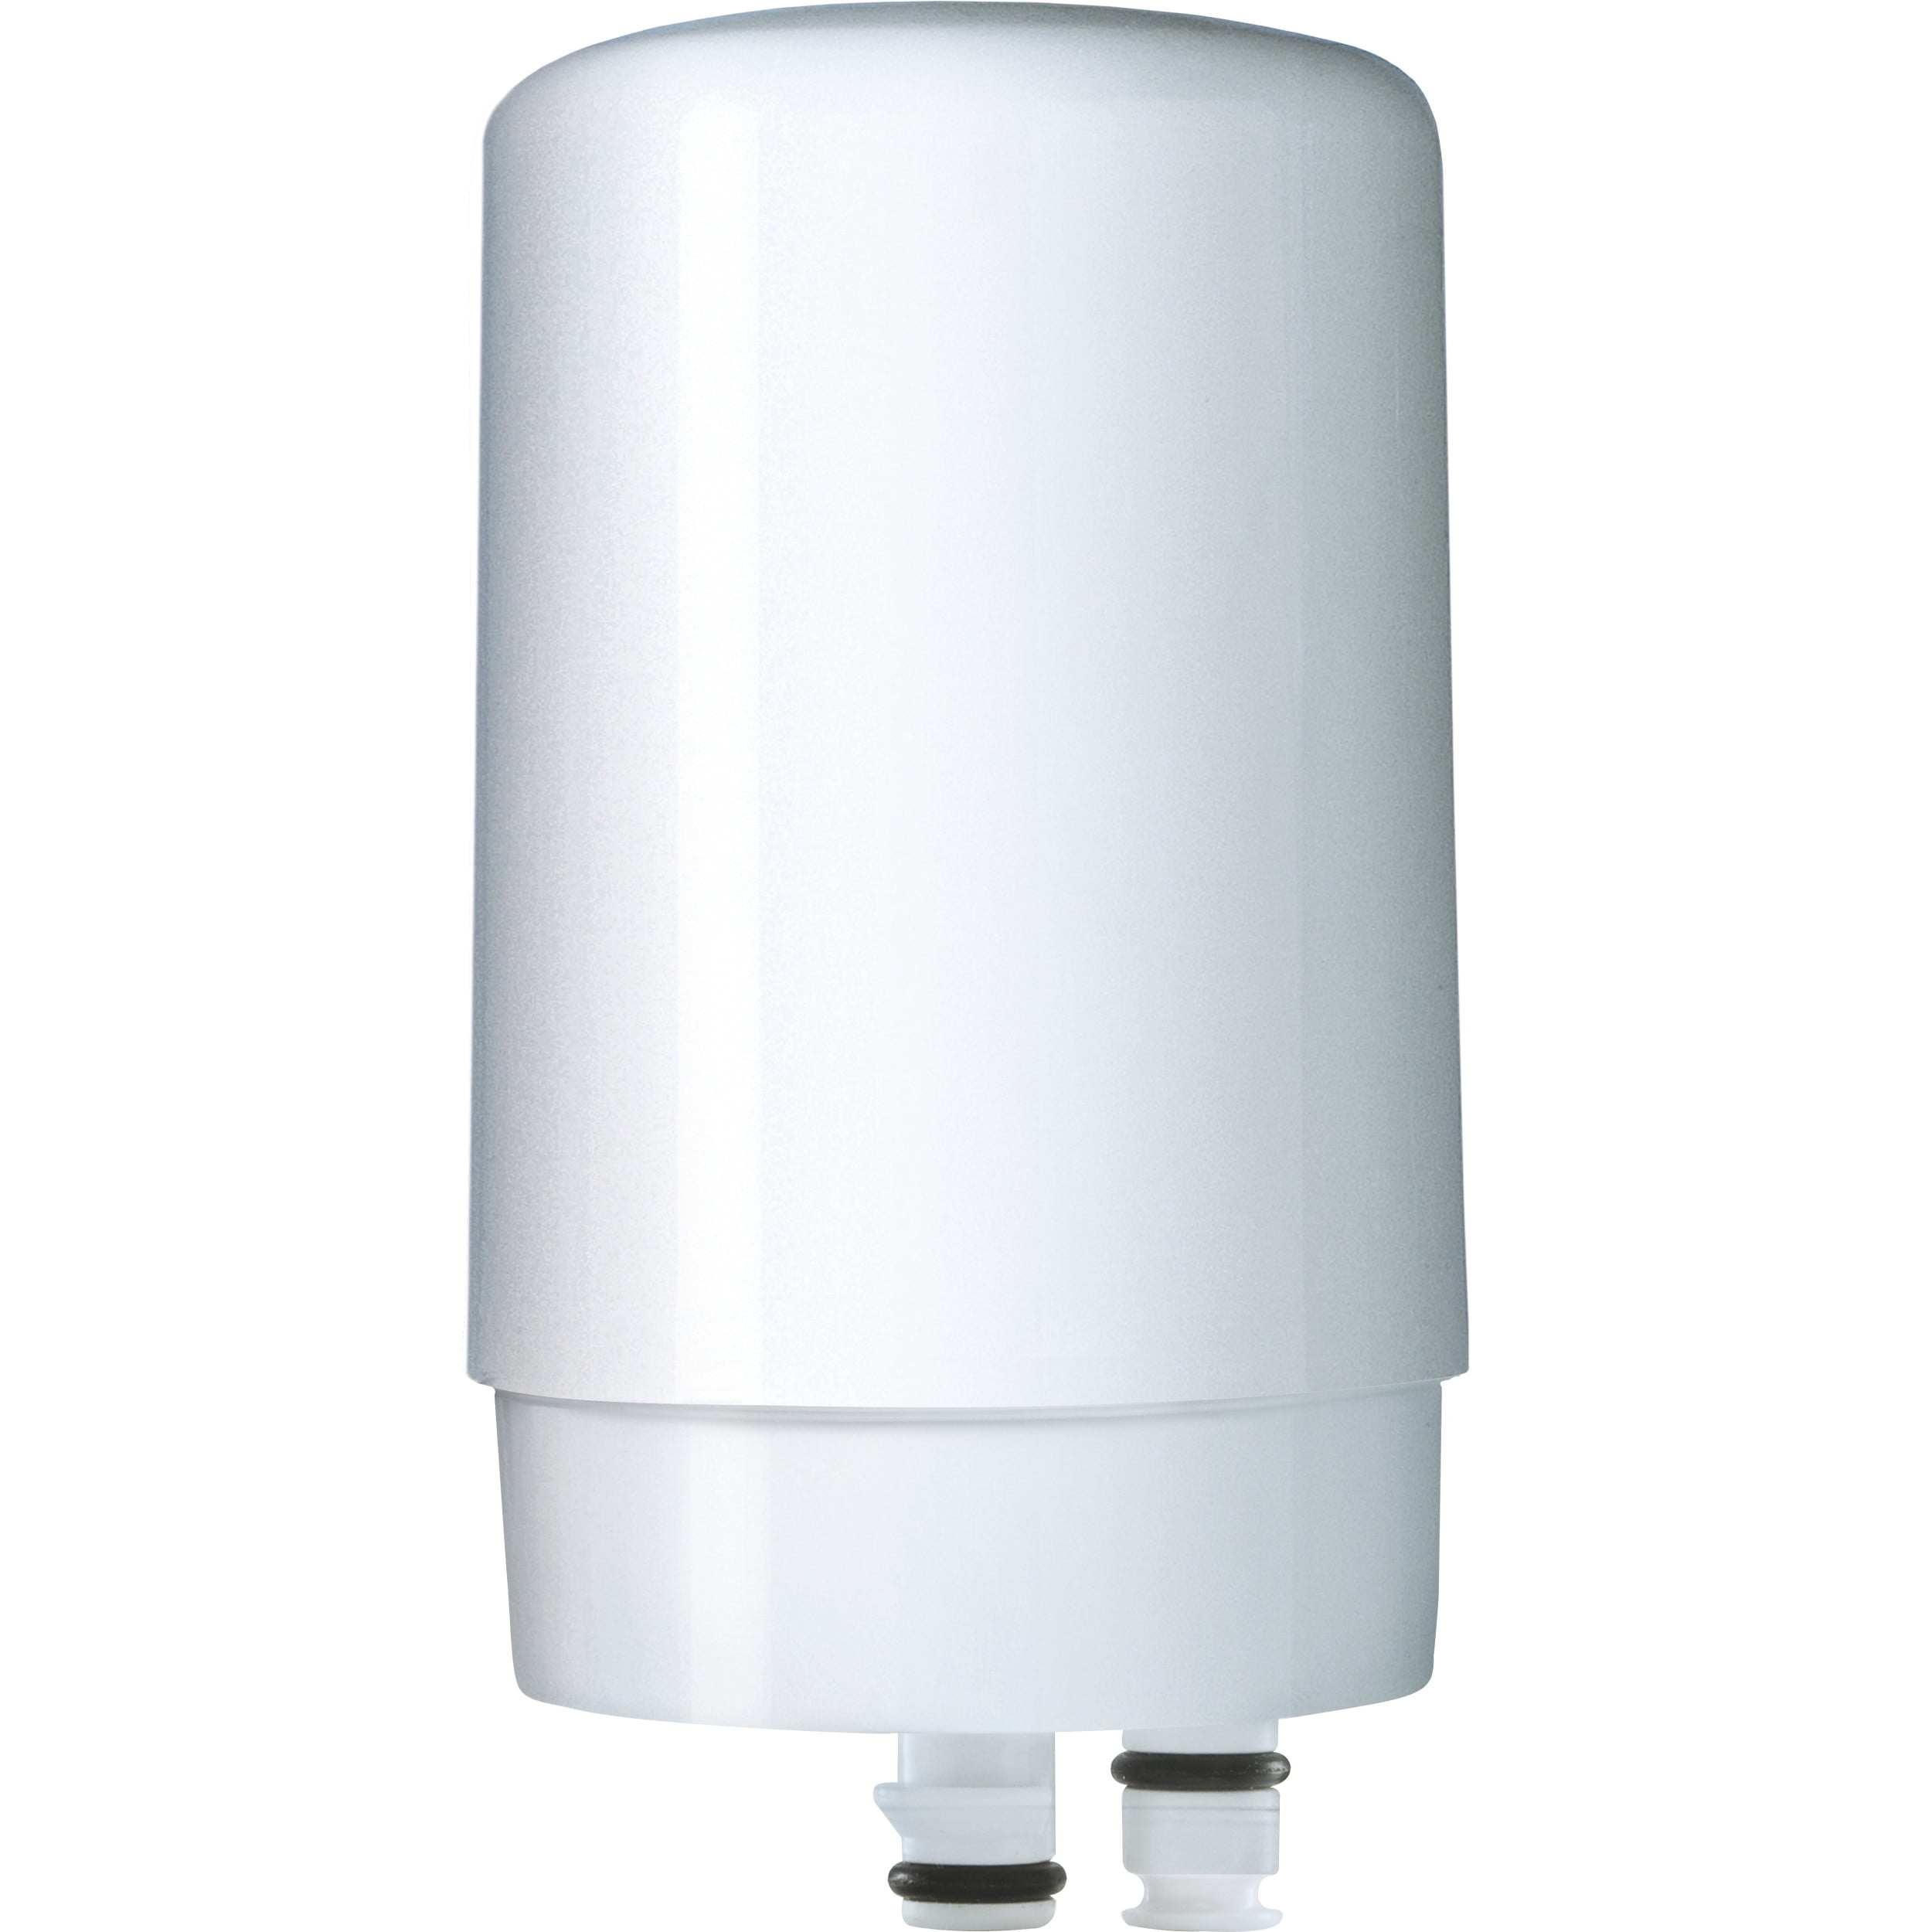 Brita Tap Water Filter System, item 3174 New/in Open Box List $45.49